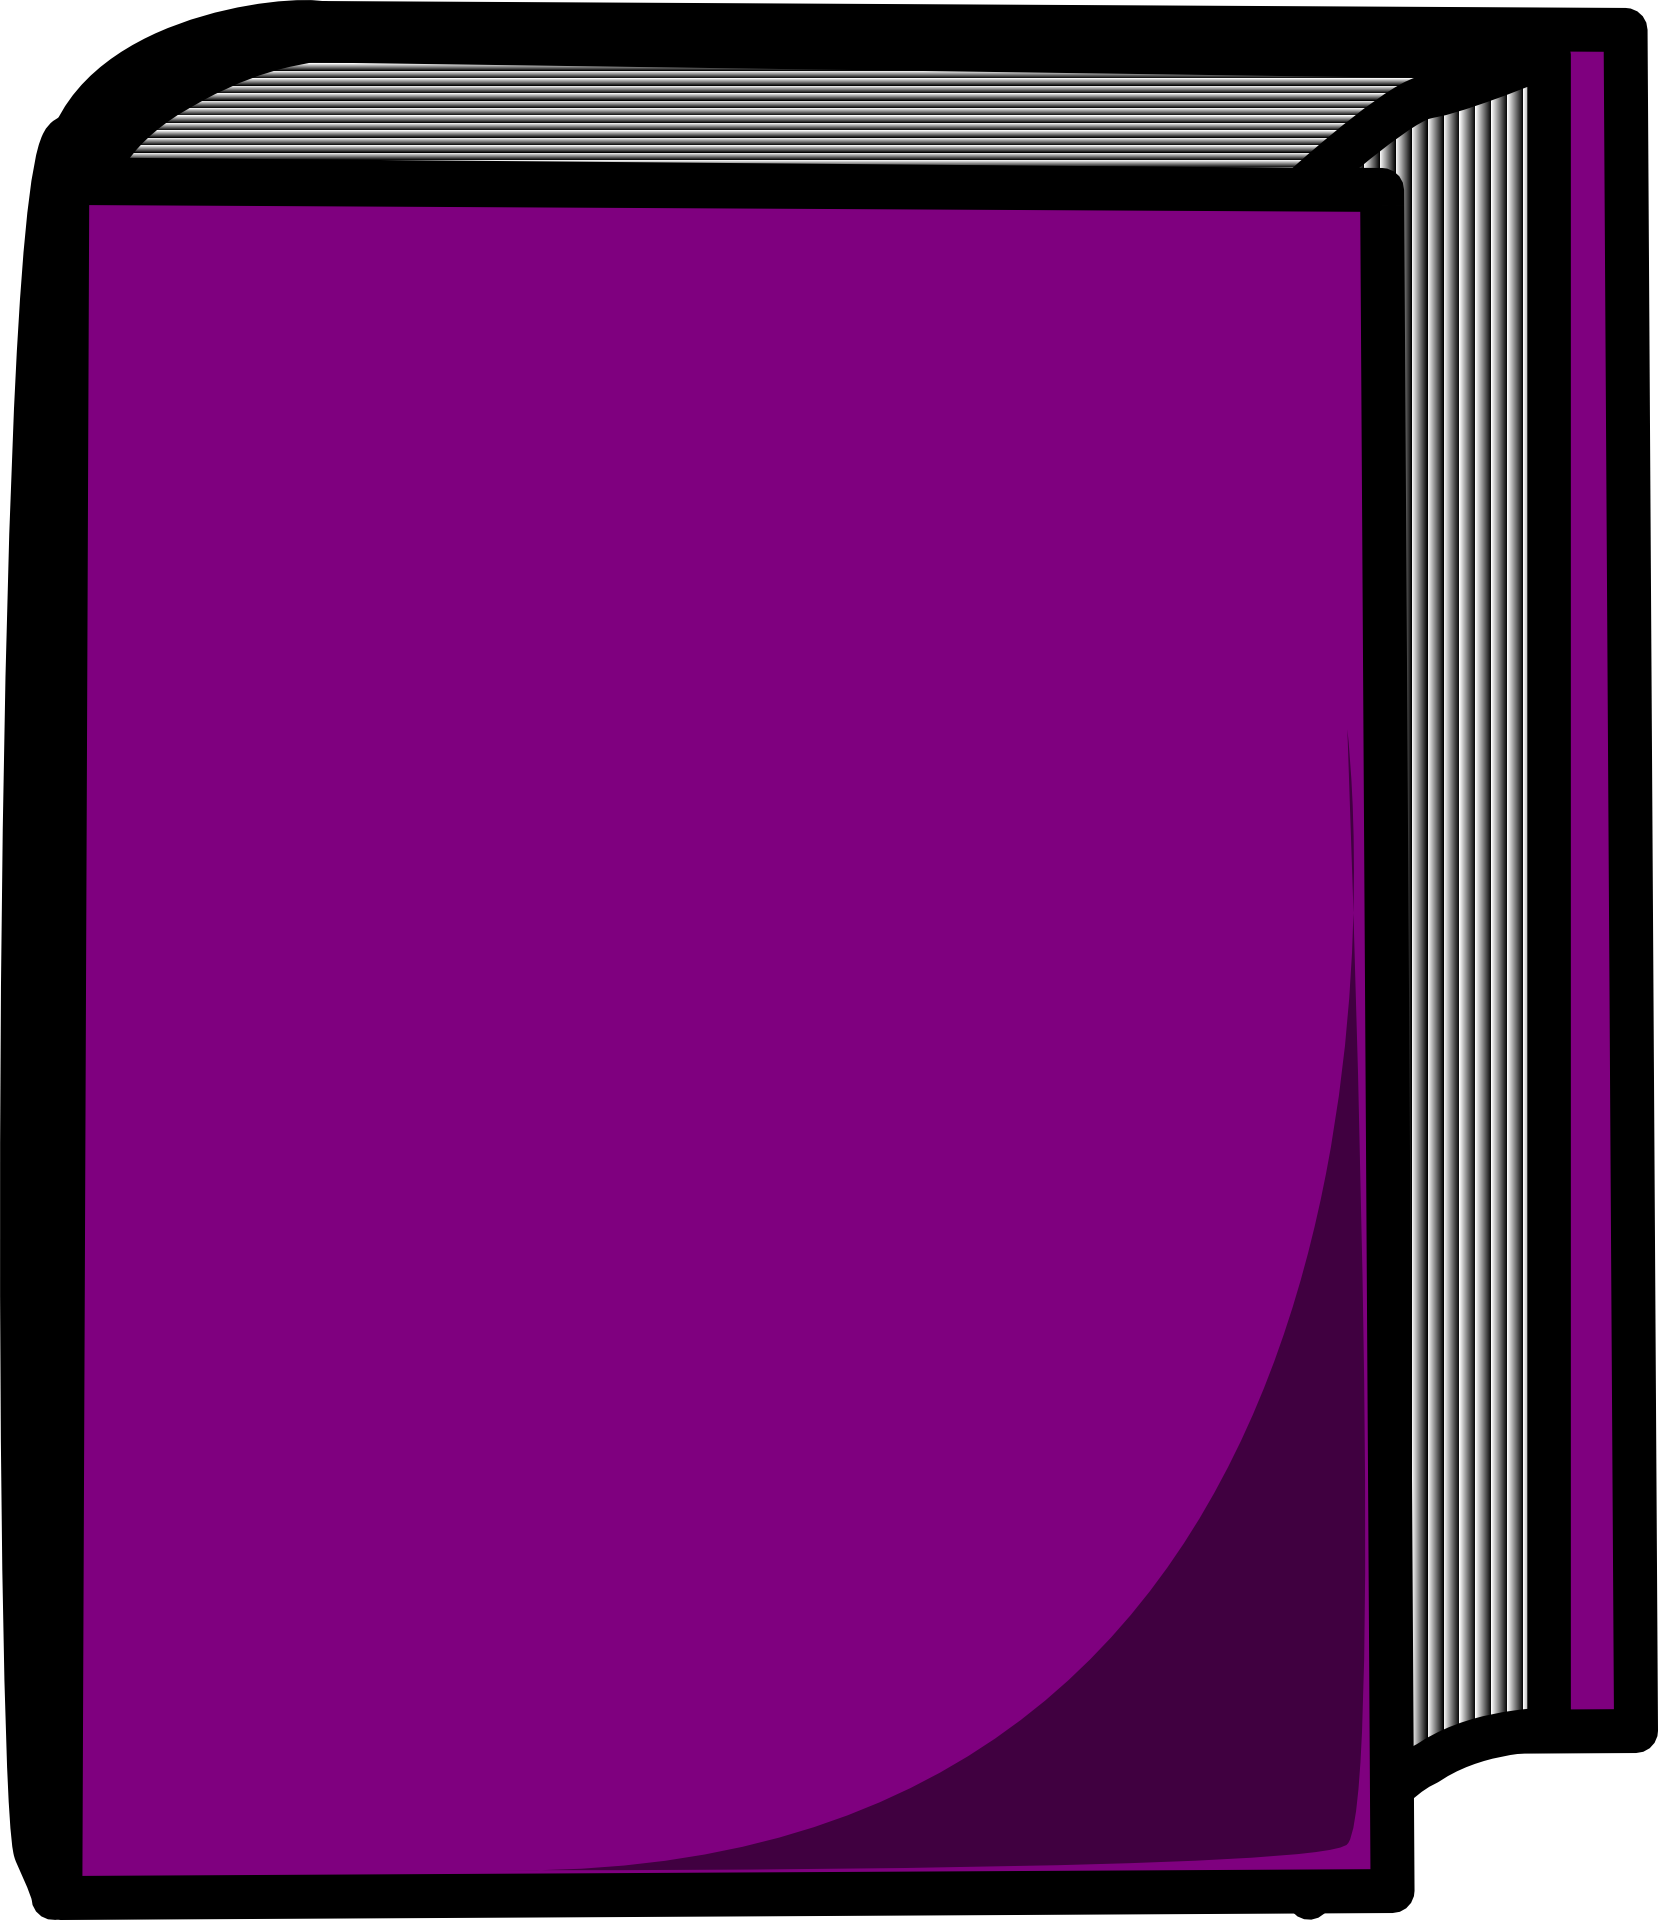 purple book image